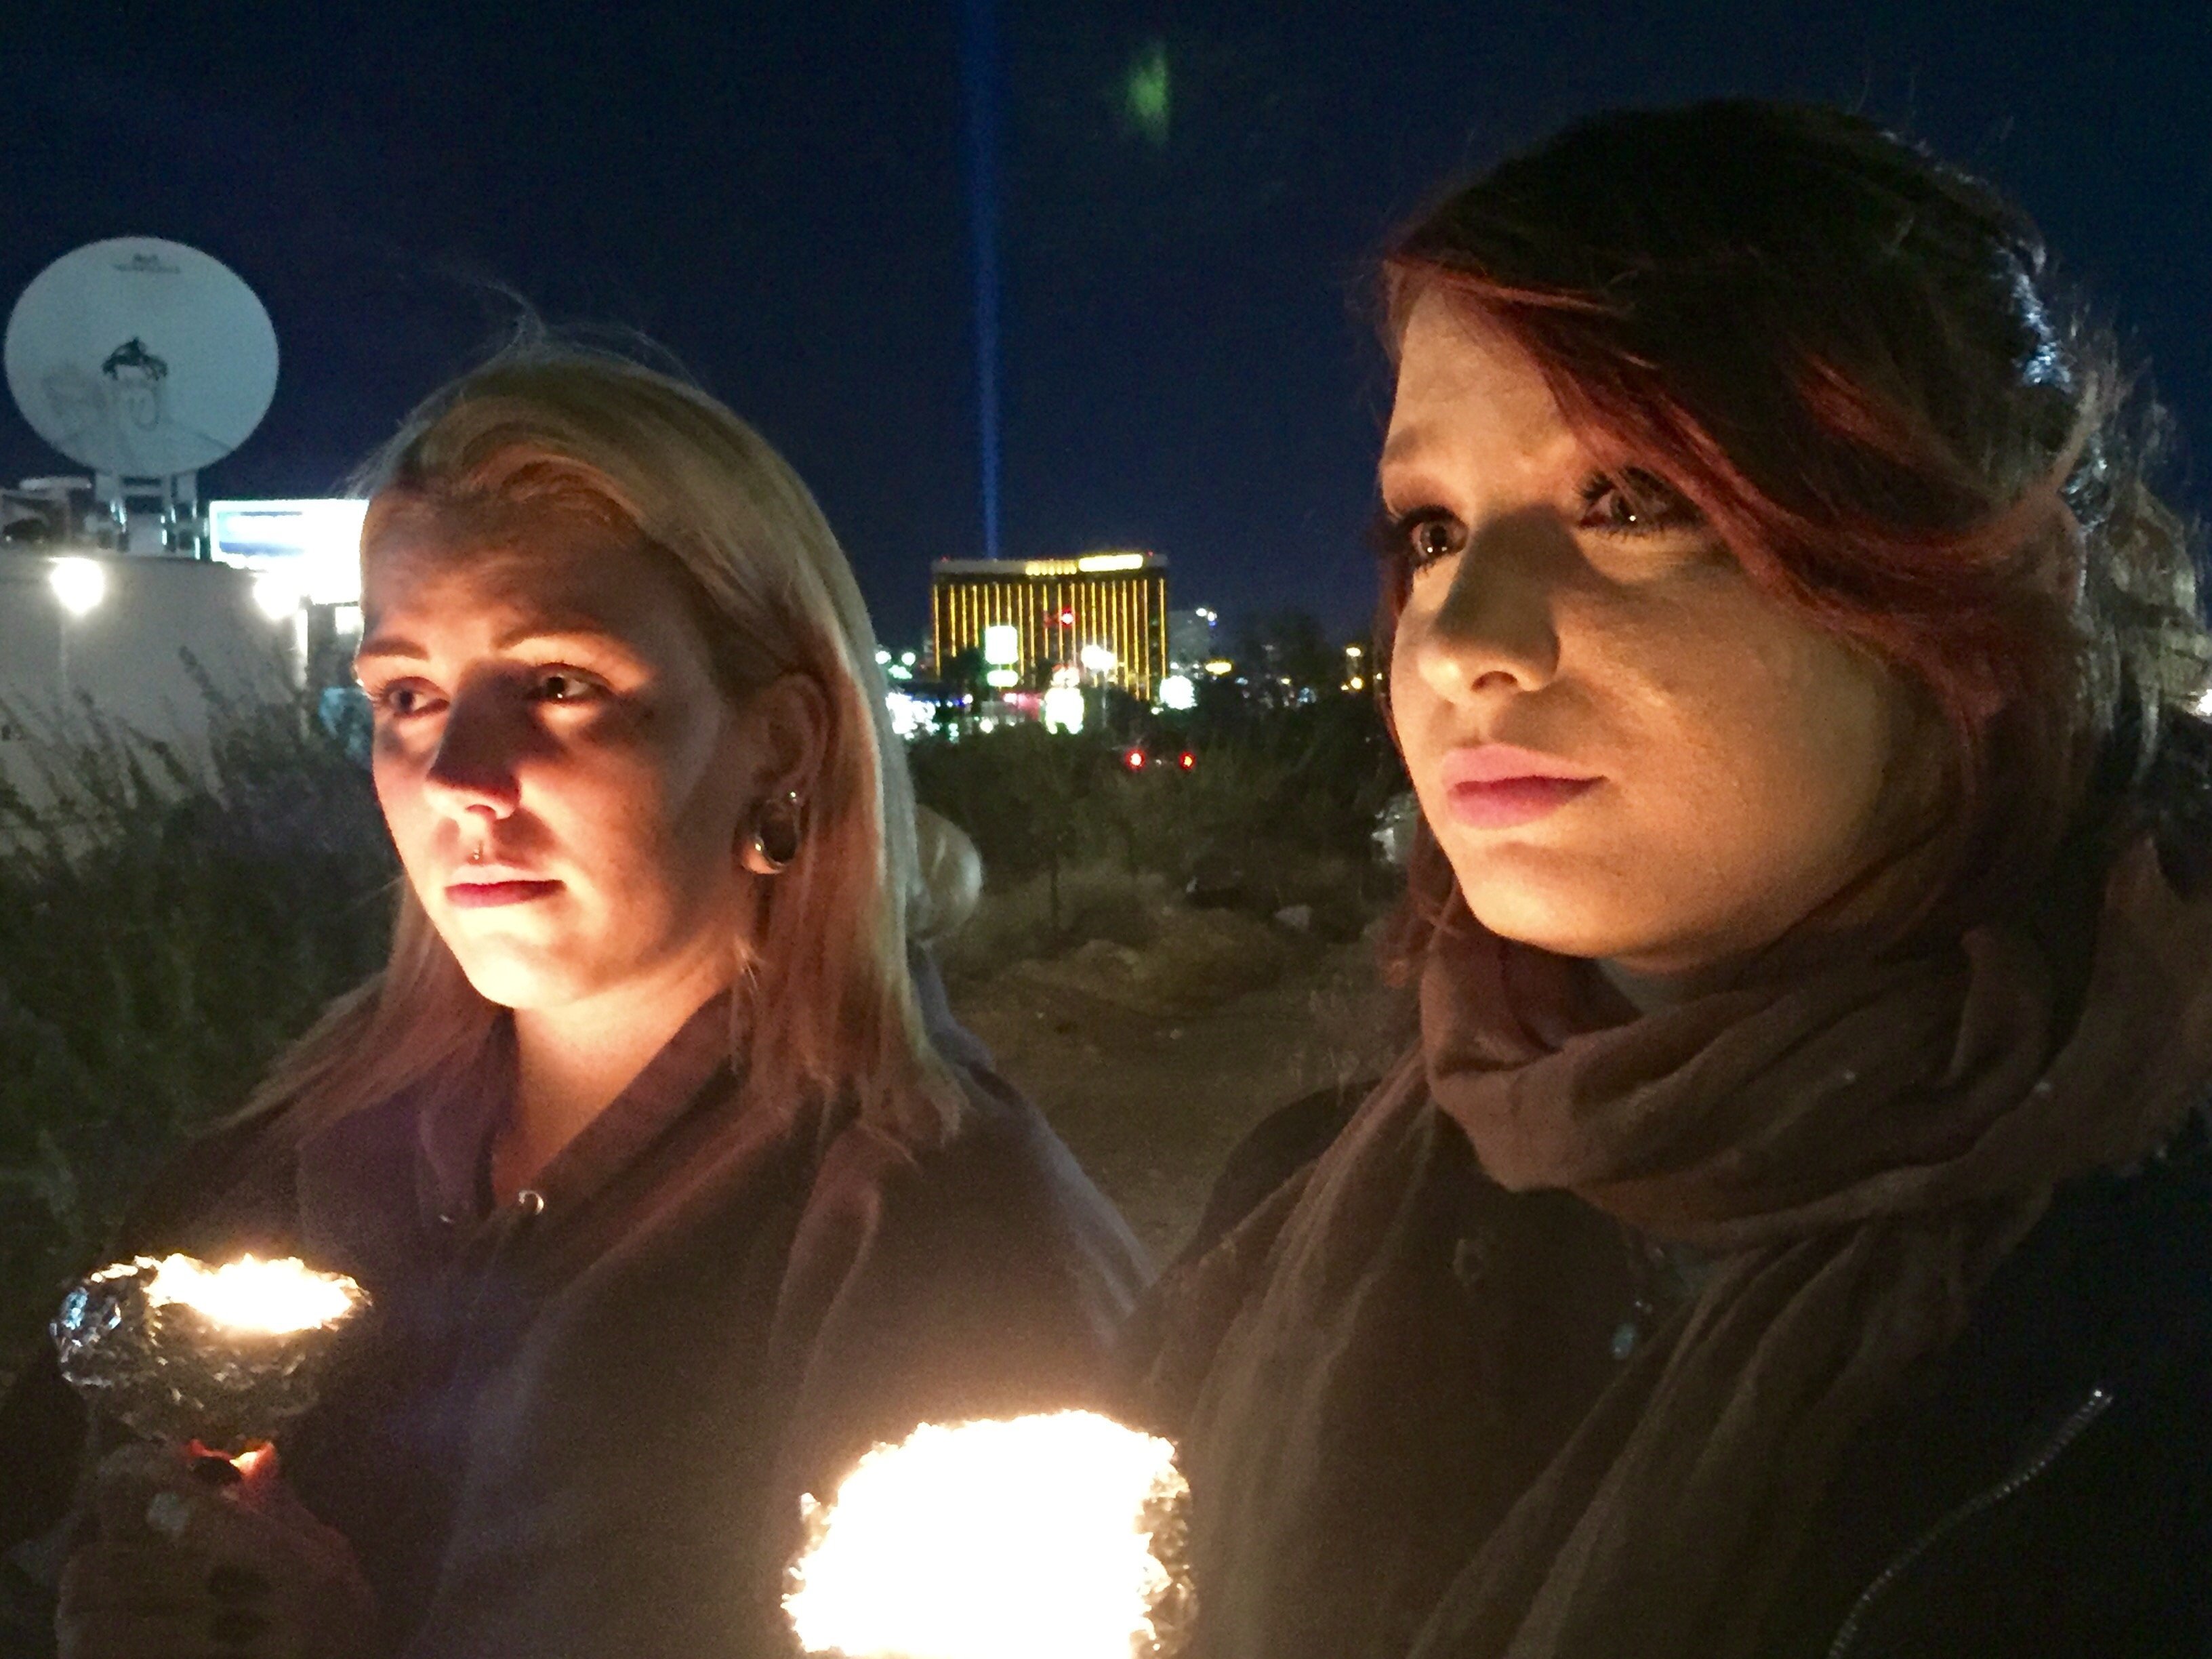 Police release preliminary investigative report on Las Vegas massacre